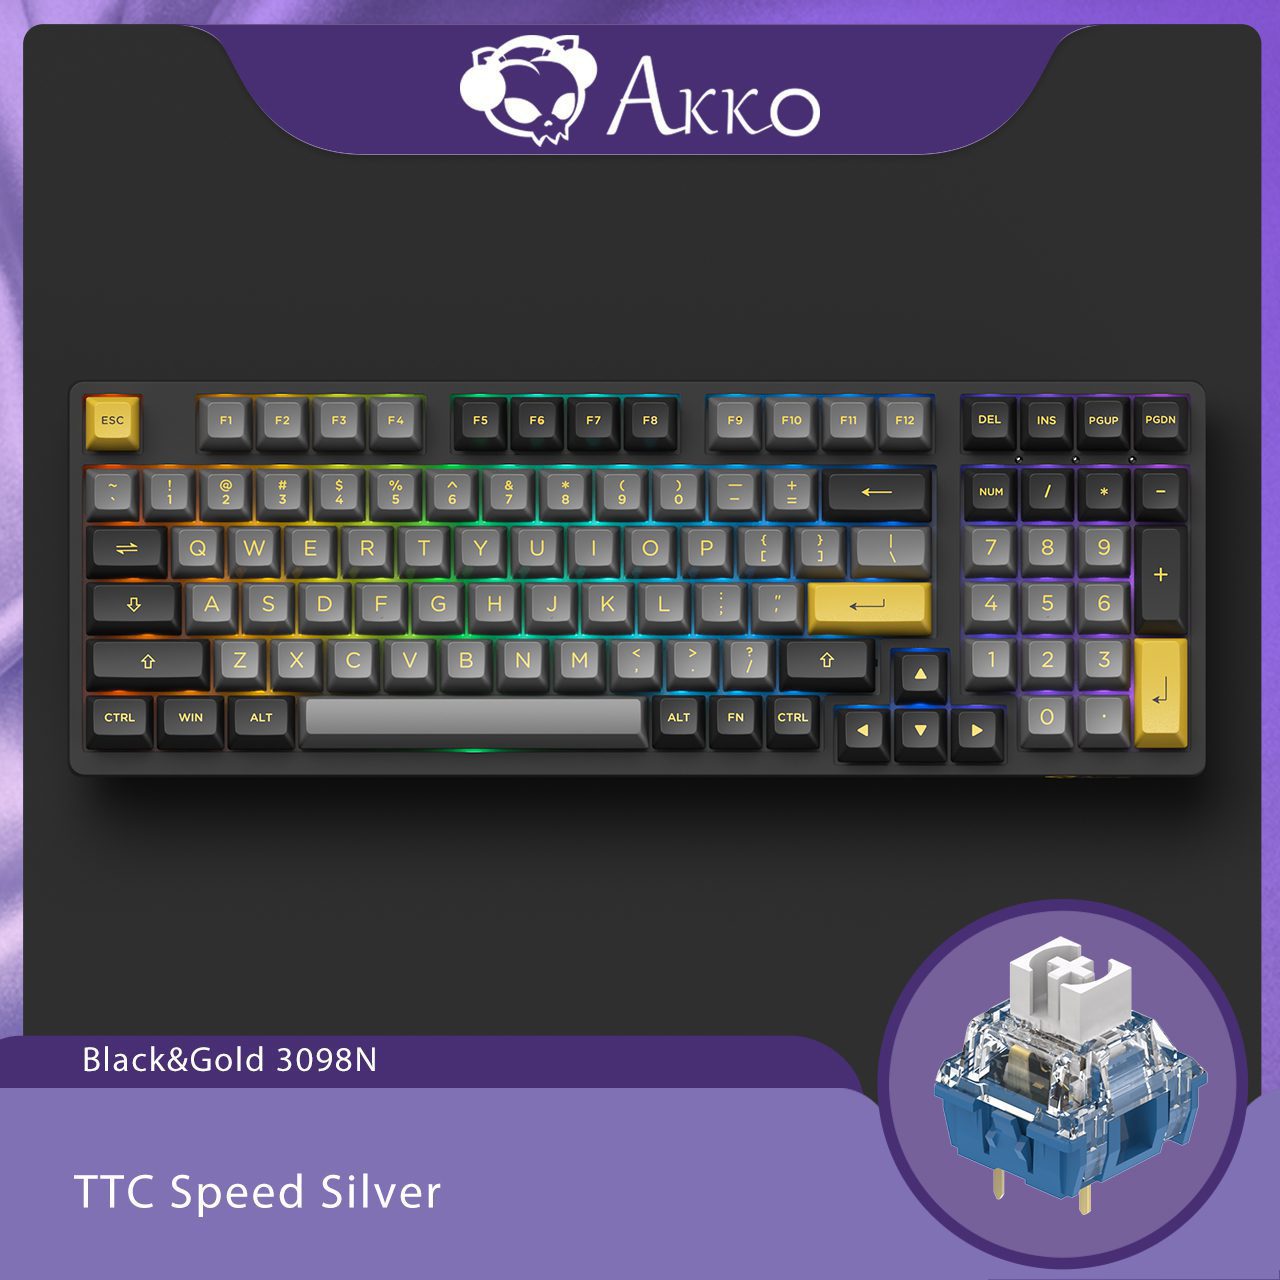 TTC Speed Silver